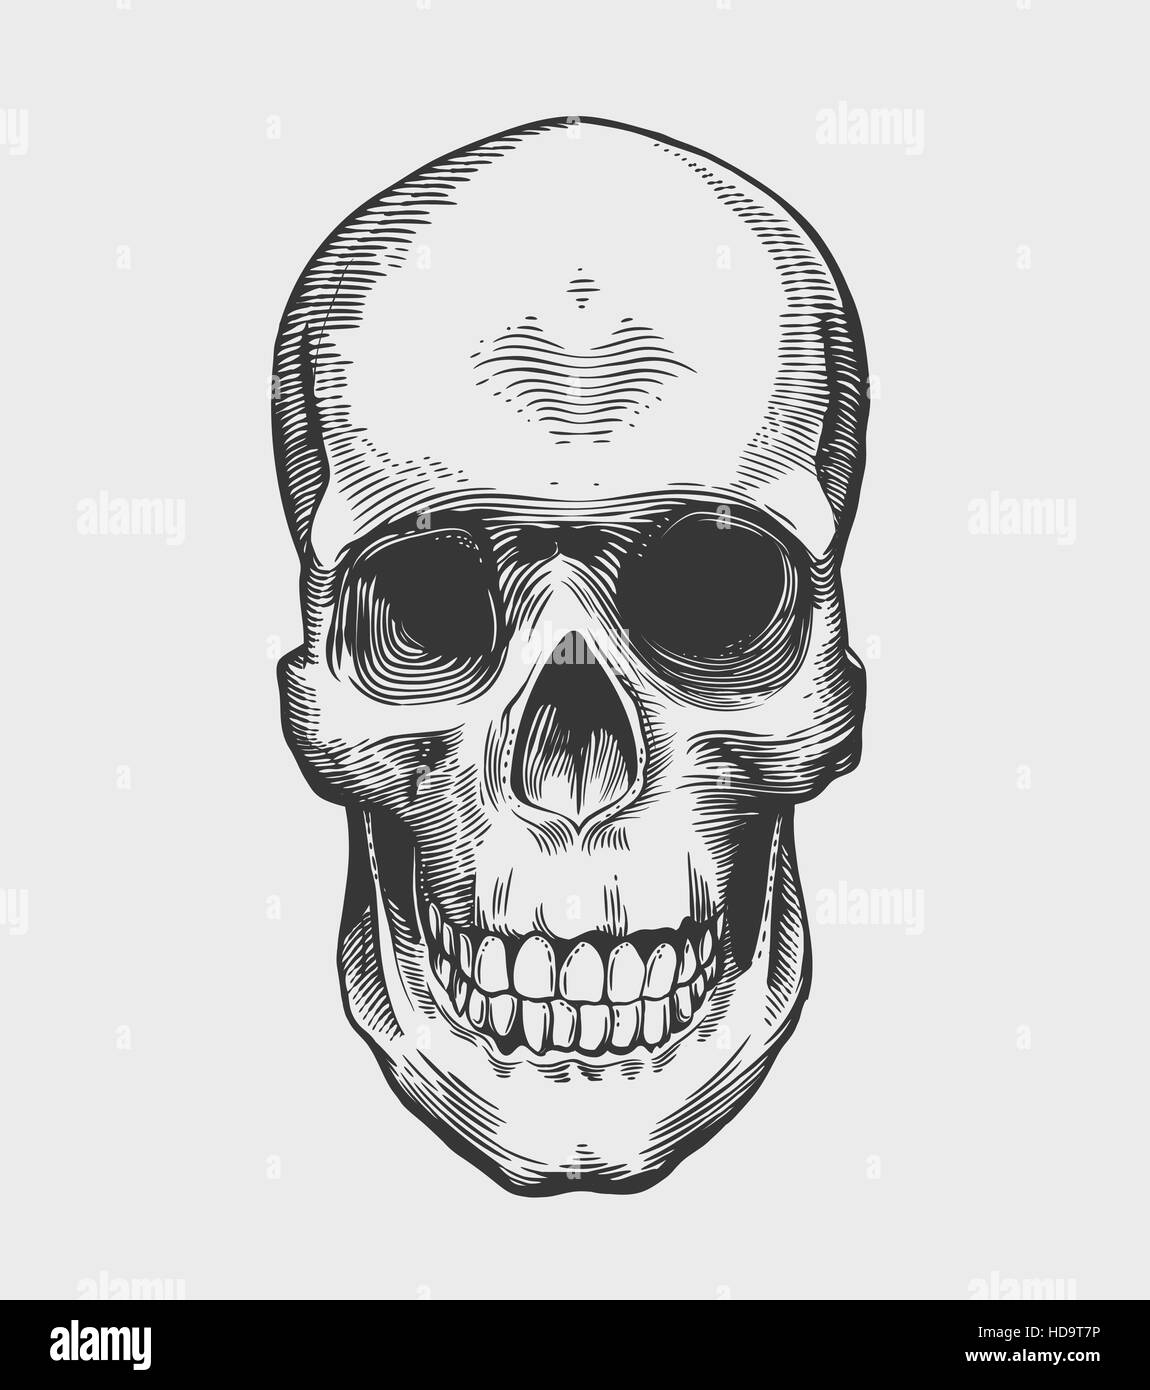 Skull in vintage engraving style. Vector illustration. Stock Vector